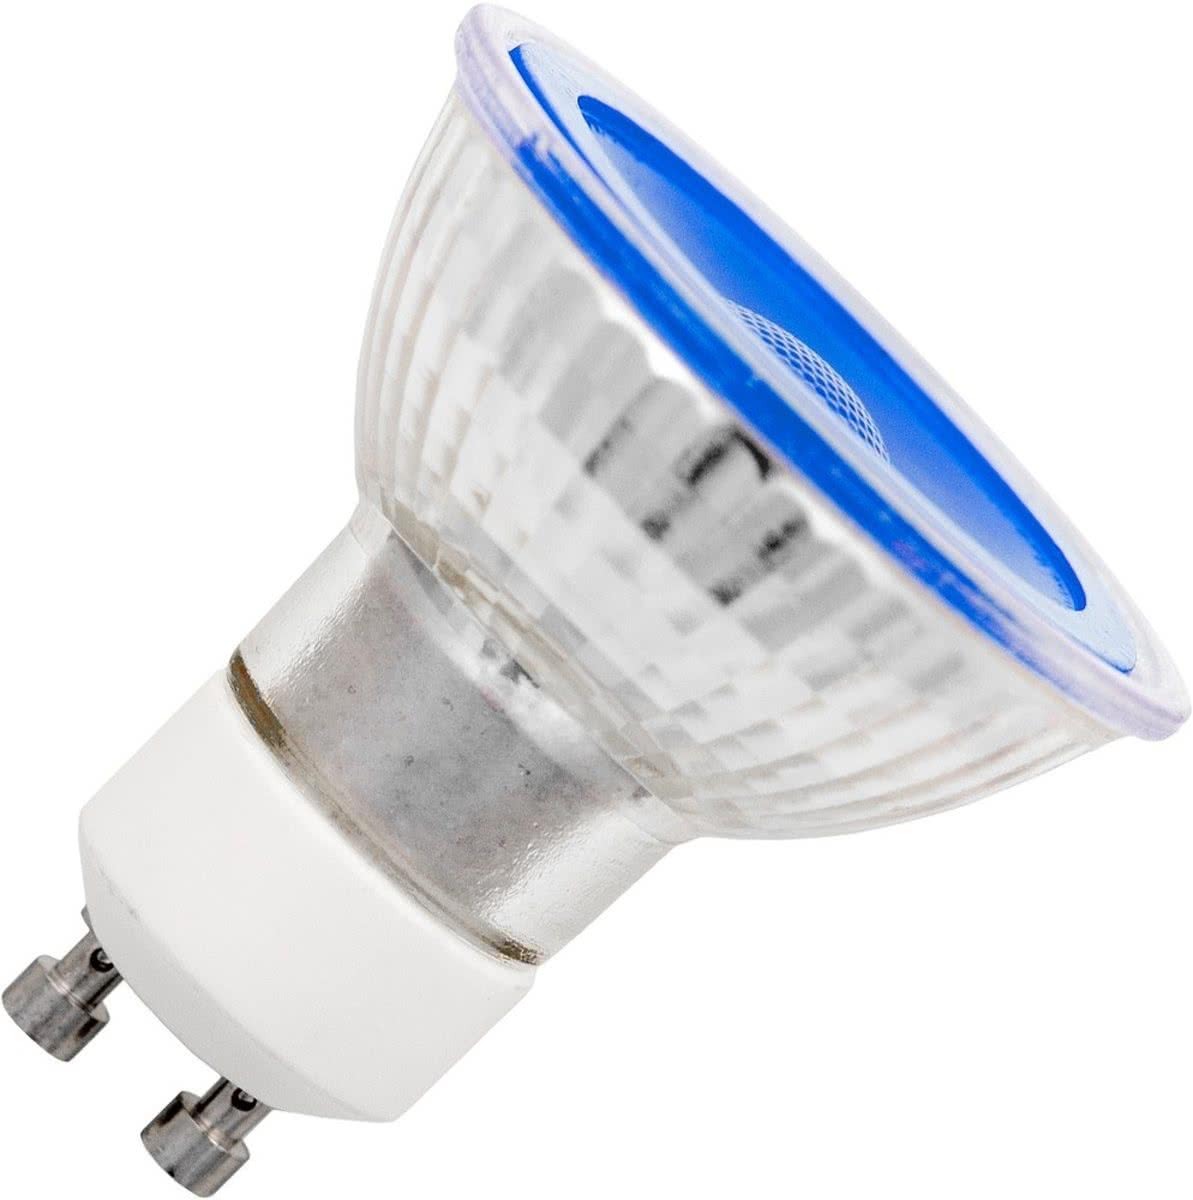 SPL reflectorlamp LED blauw 230V 5W (vervangt 50W) GU10 50mm